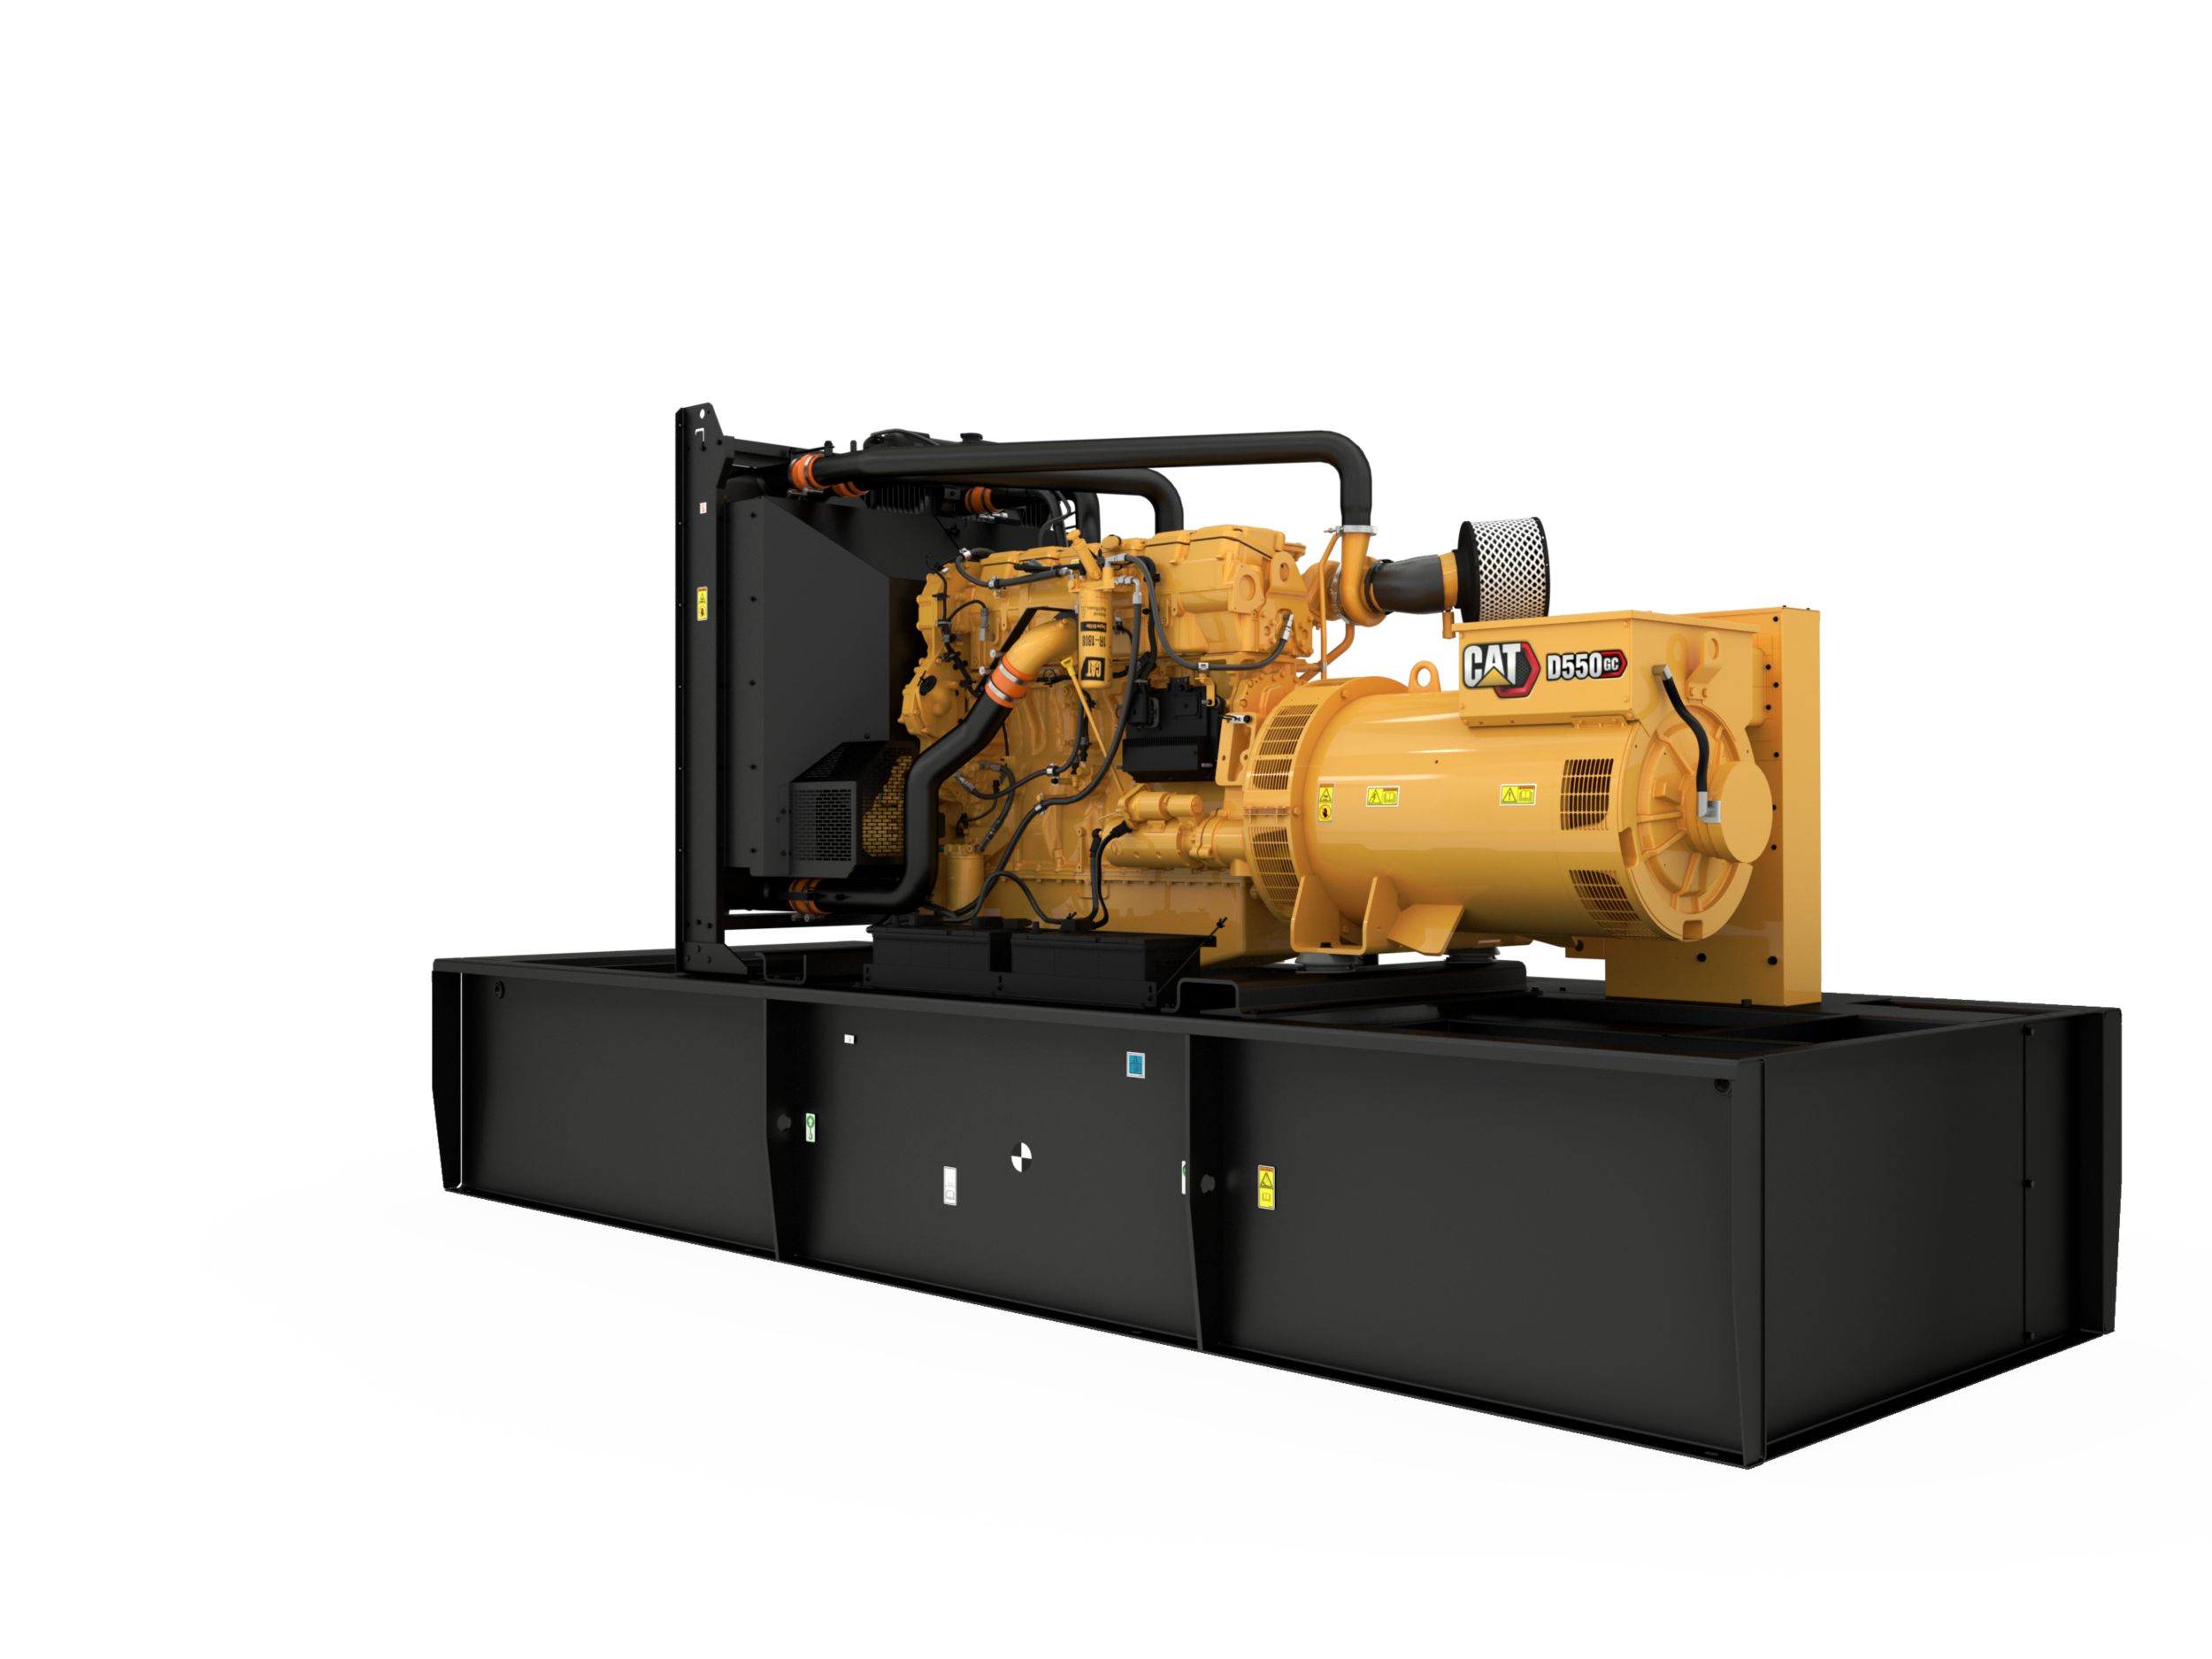 D550 GC (60 Hz) Generator Set